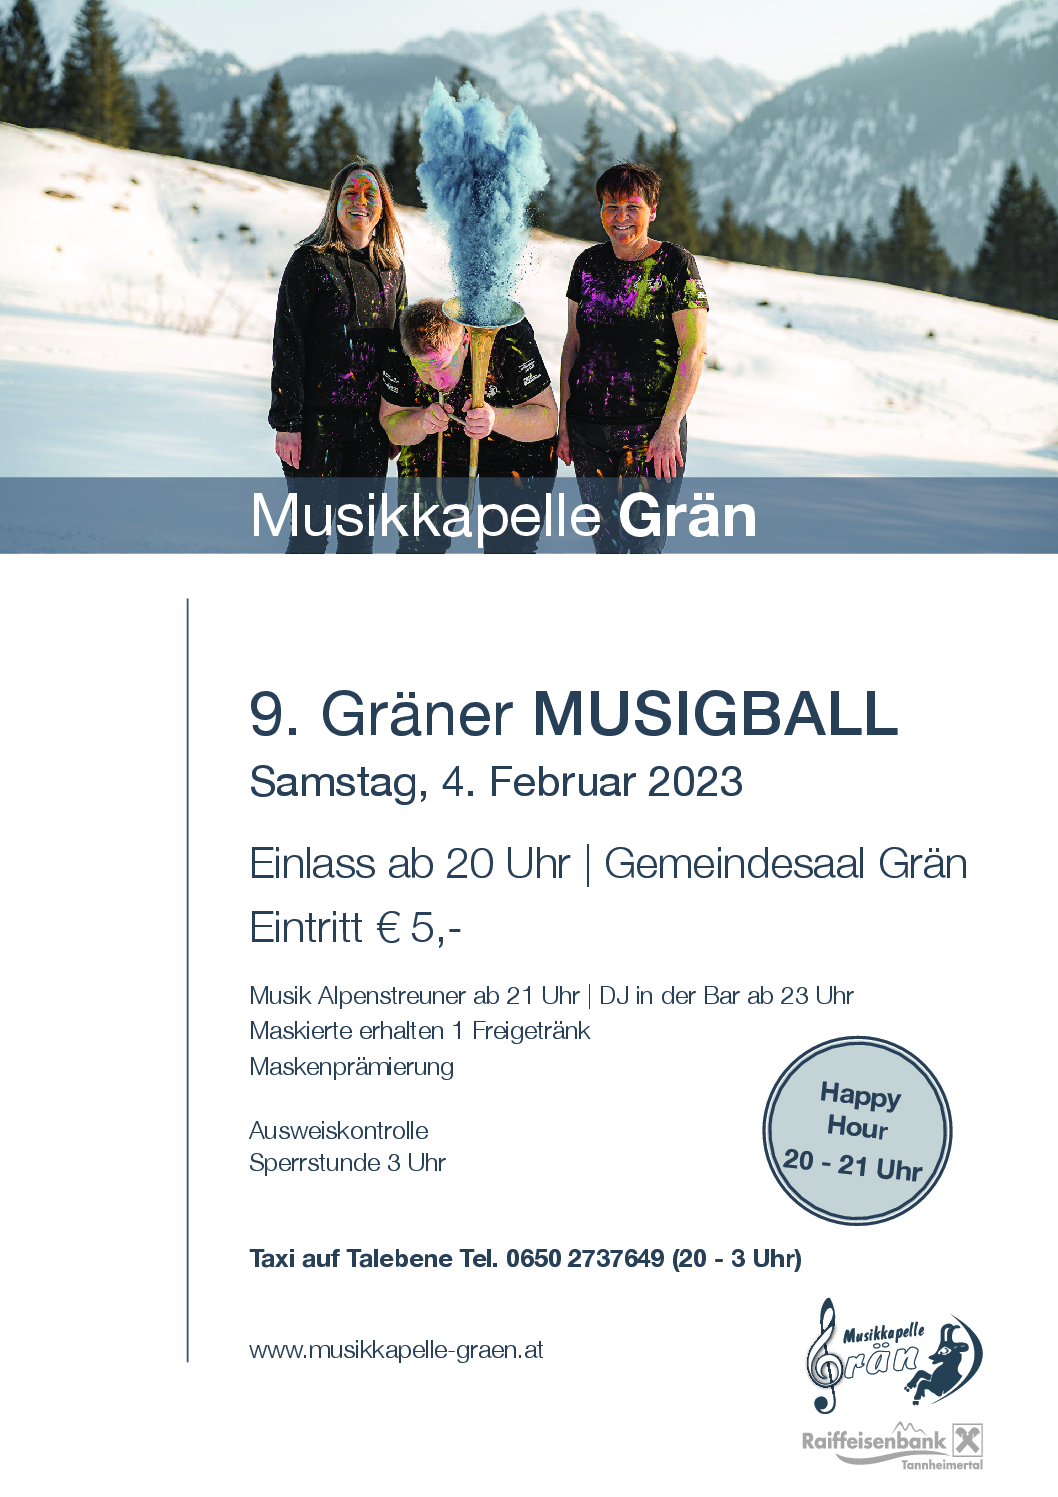 MK Grän - Musigball @ Gemeindesaal Grän